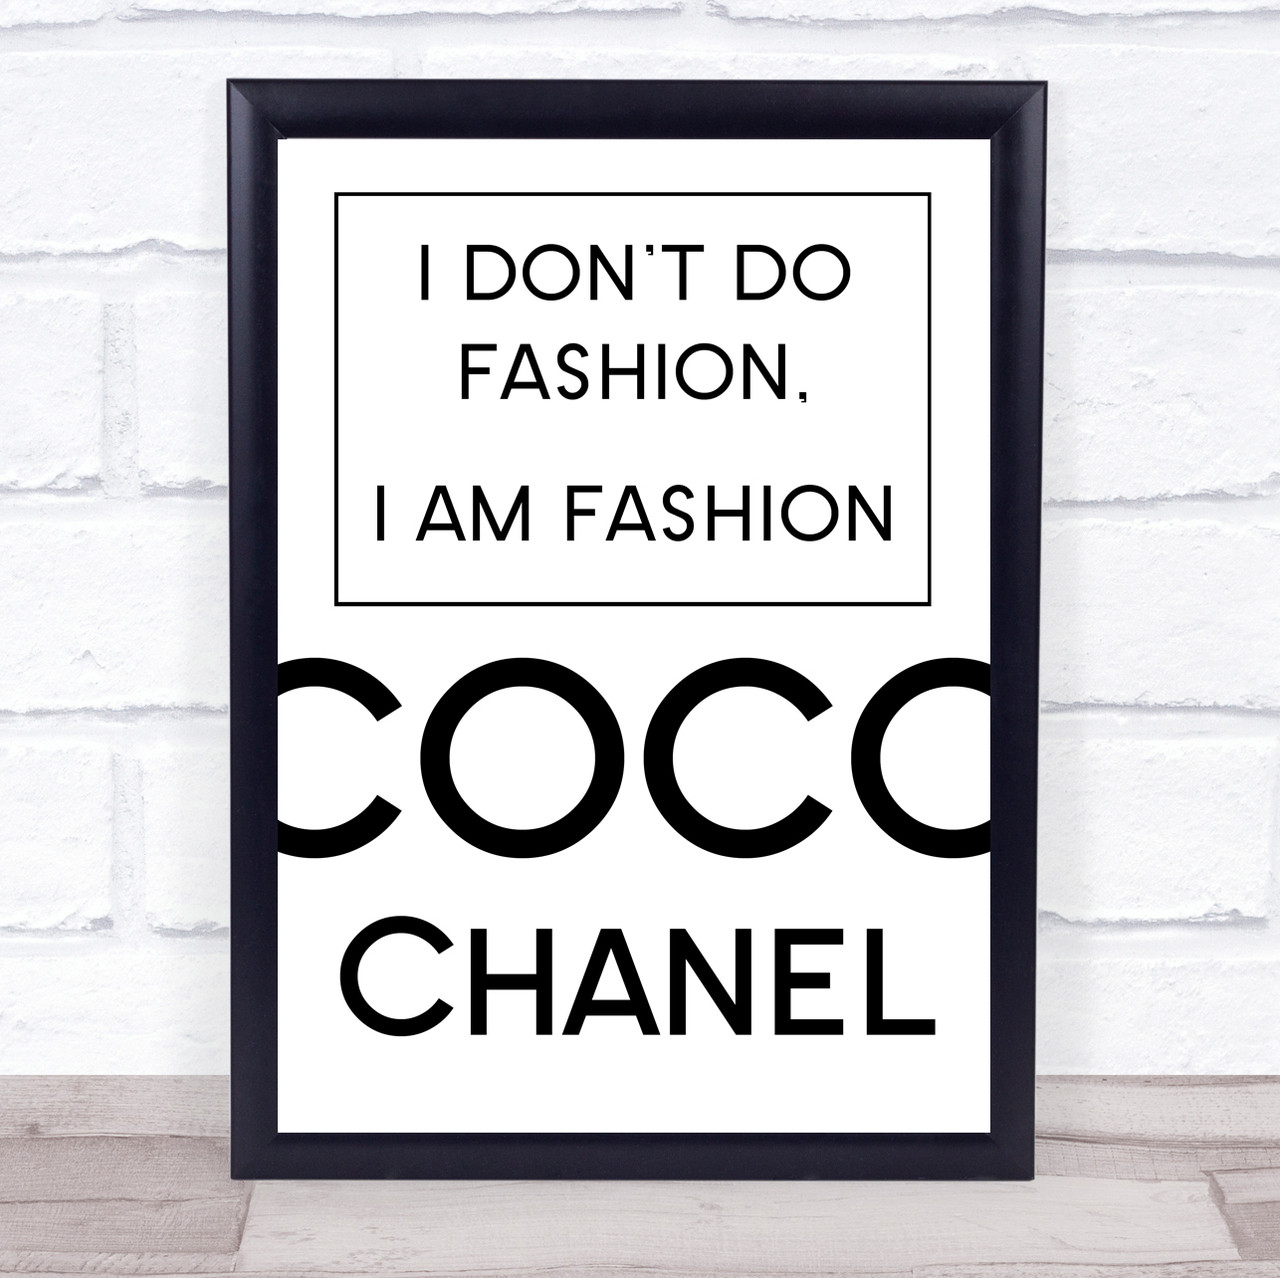 Coco Avant Chanel 2009 Poster Print   24138297